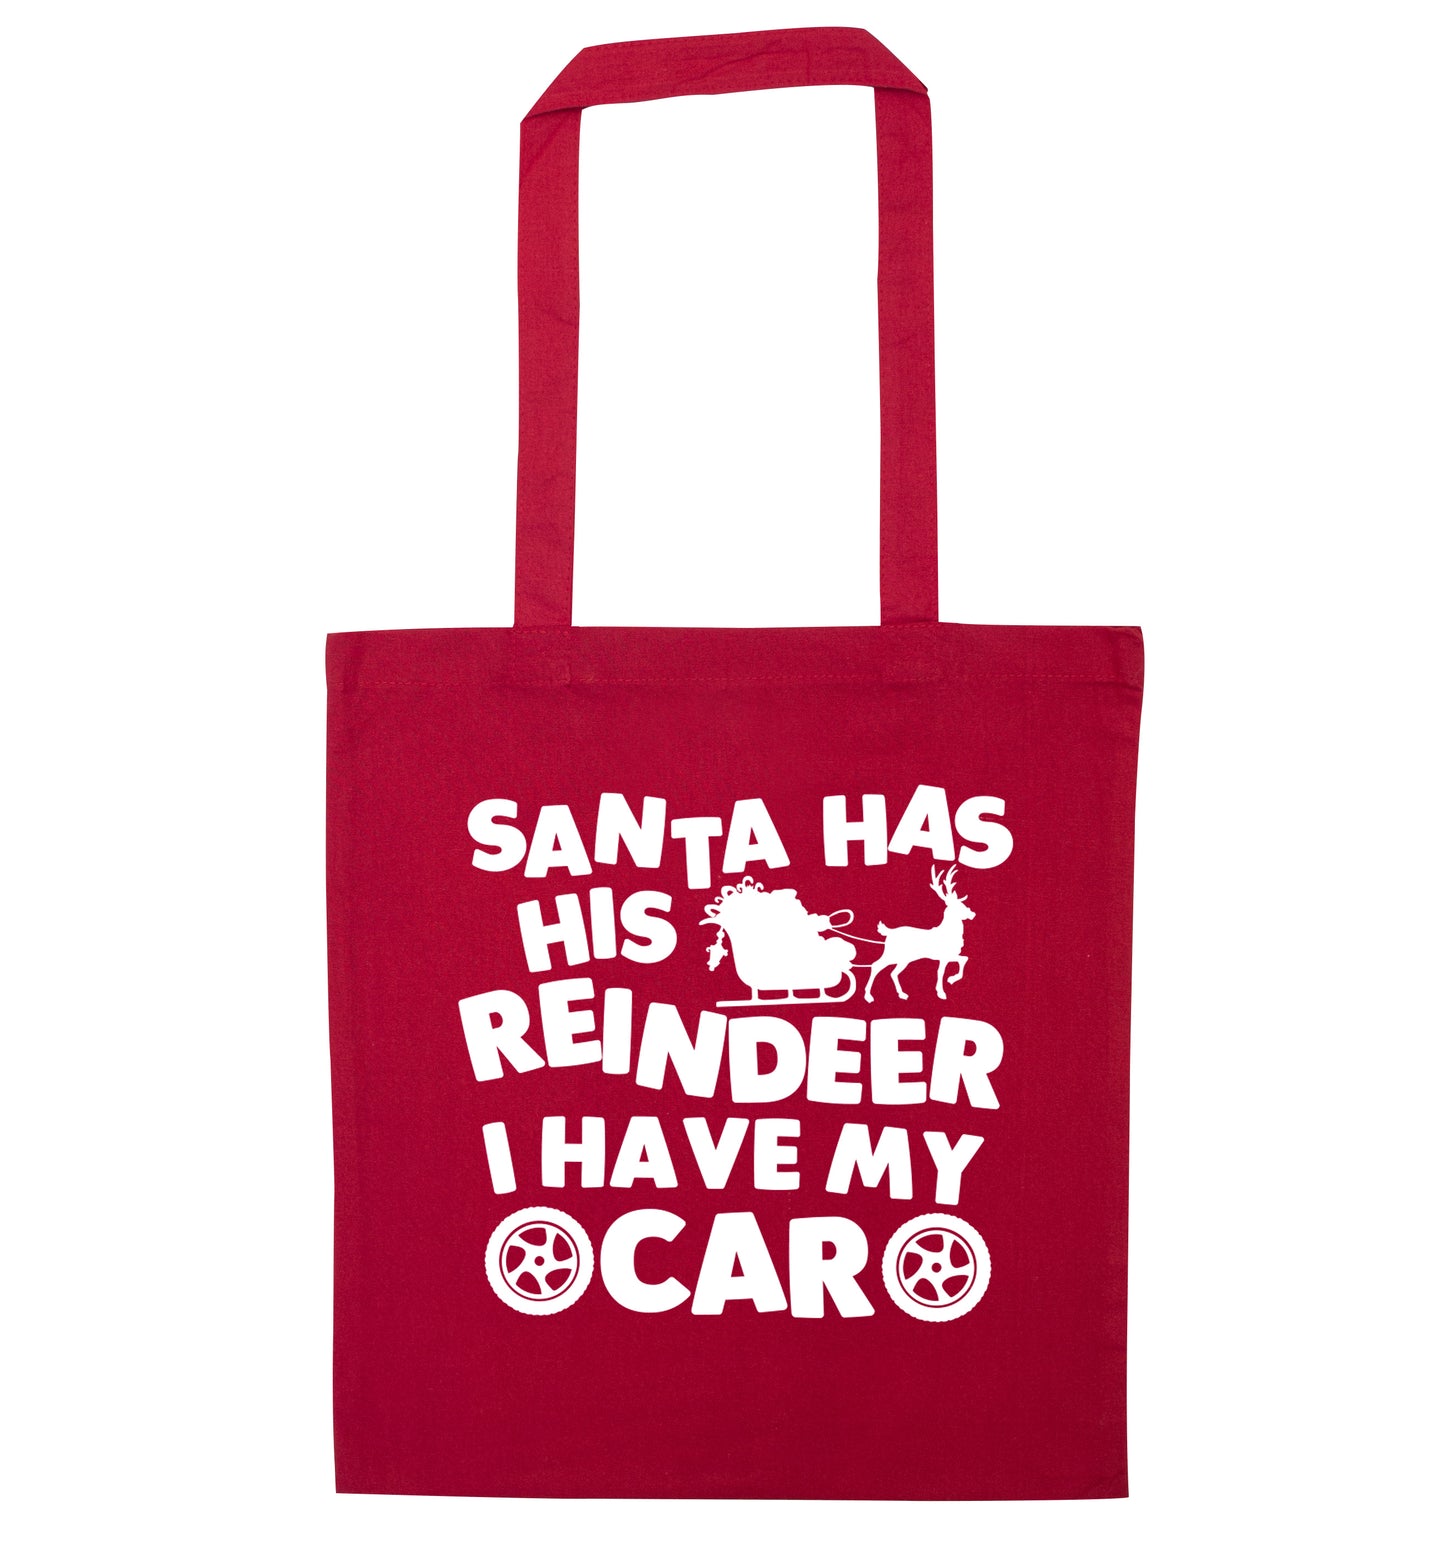 Santa has his reindeer I have my car red tote bag